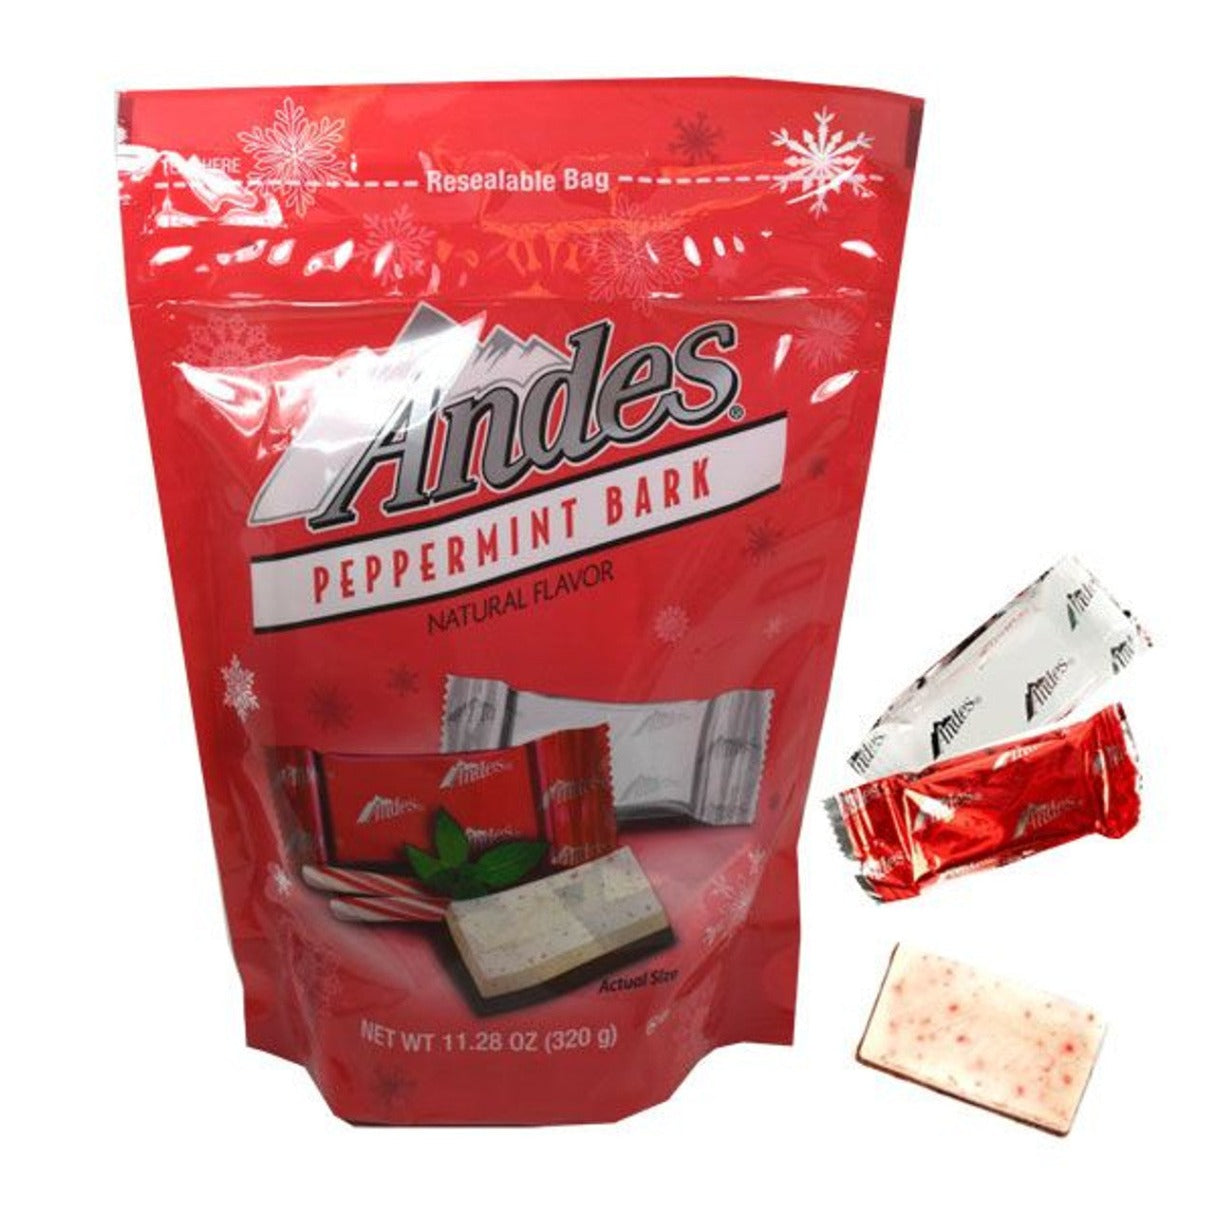 Andes Mints Peppermint Bark Bag 11.28oz - 12ct